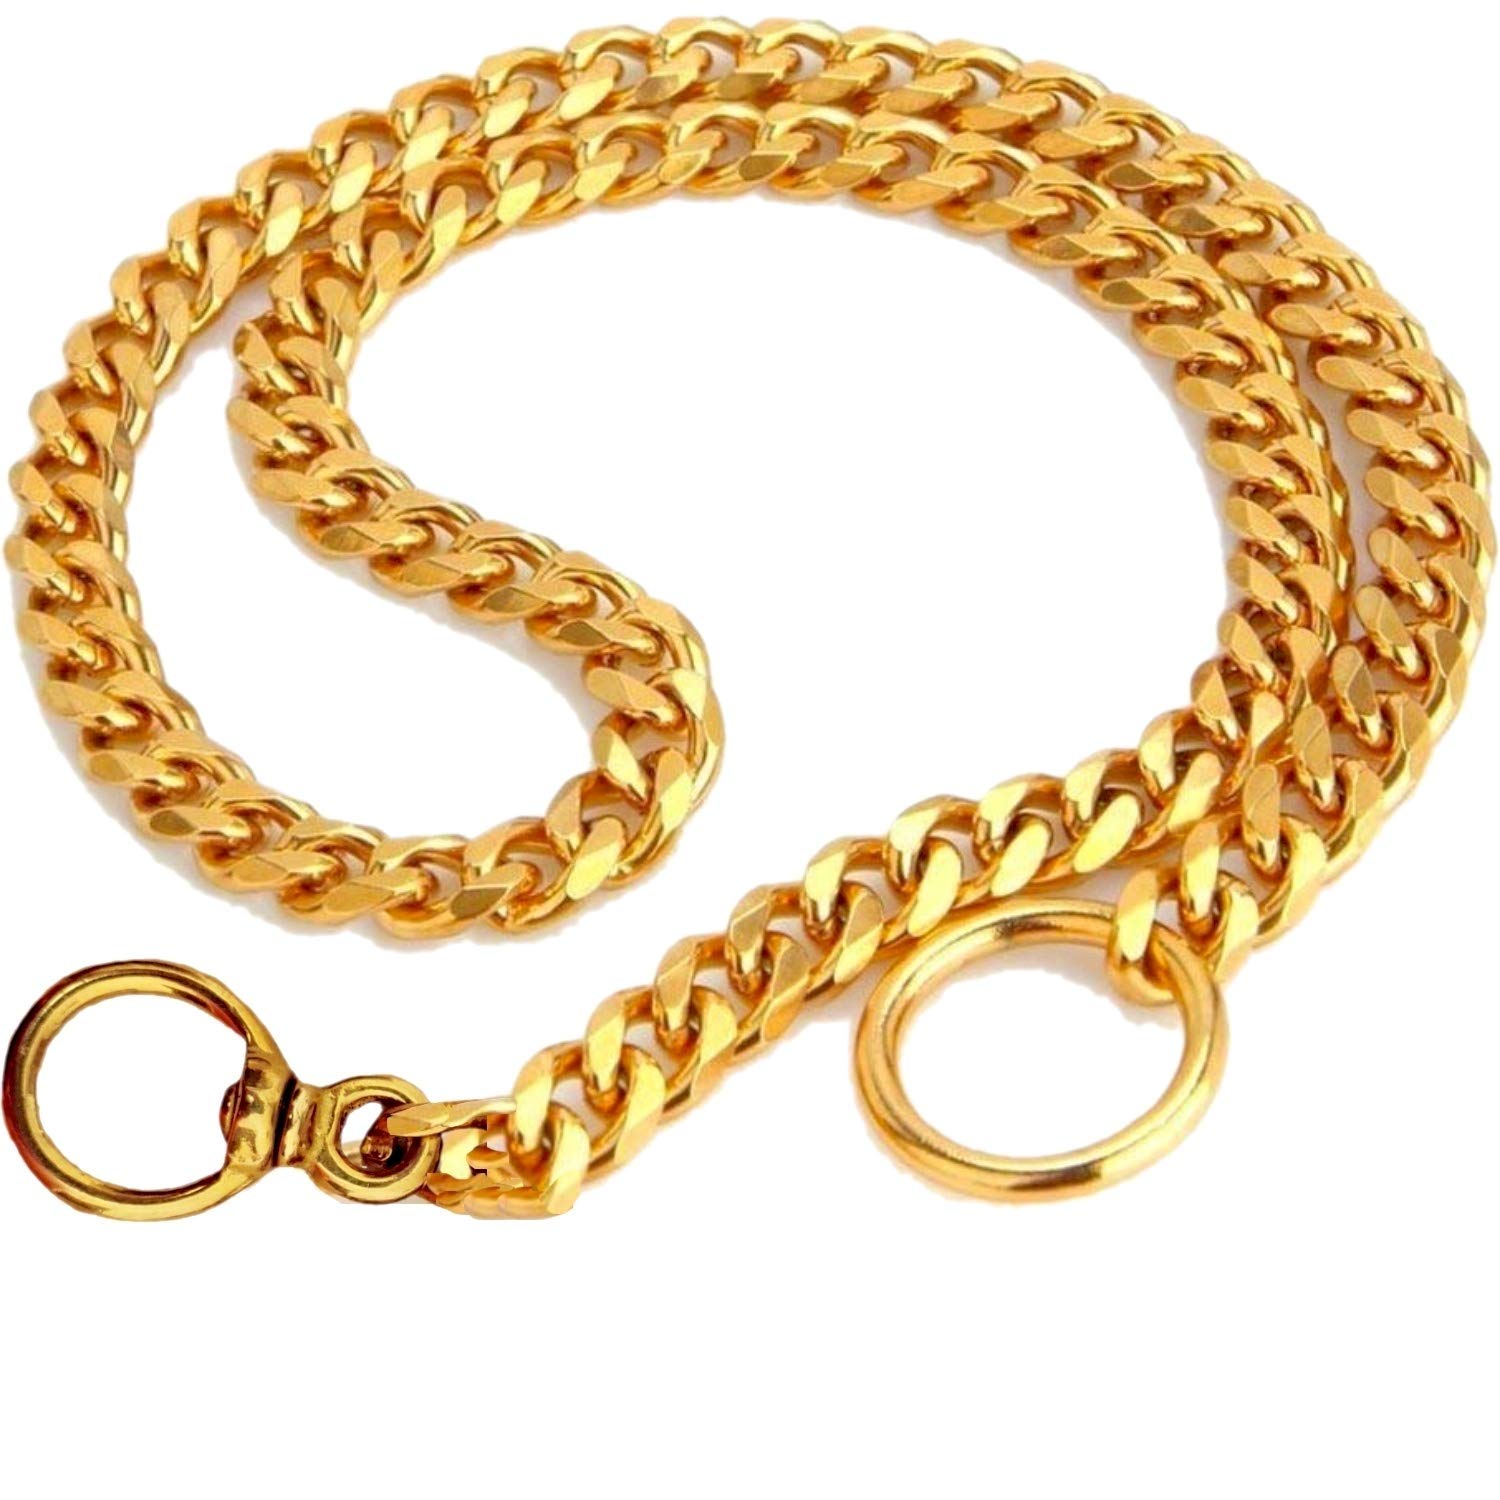 brass dog chain